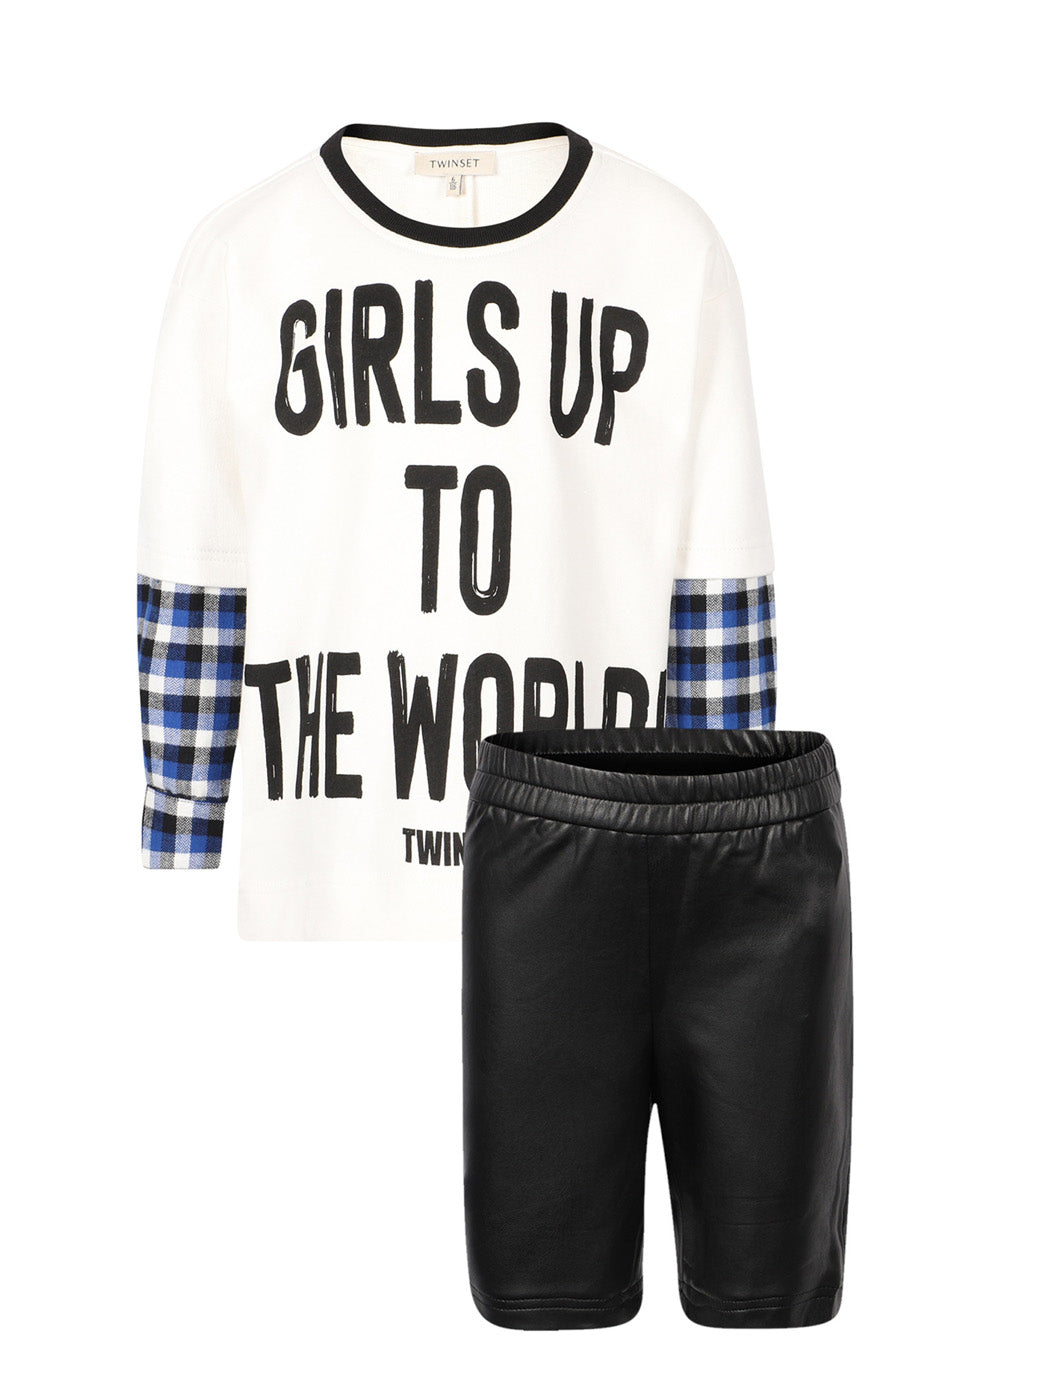 TWINSET Girl's Sweatshirt and cycling shorts-212GJ2455